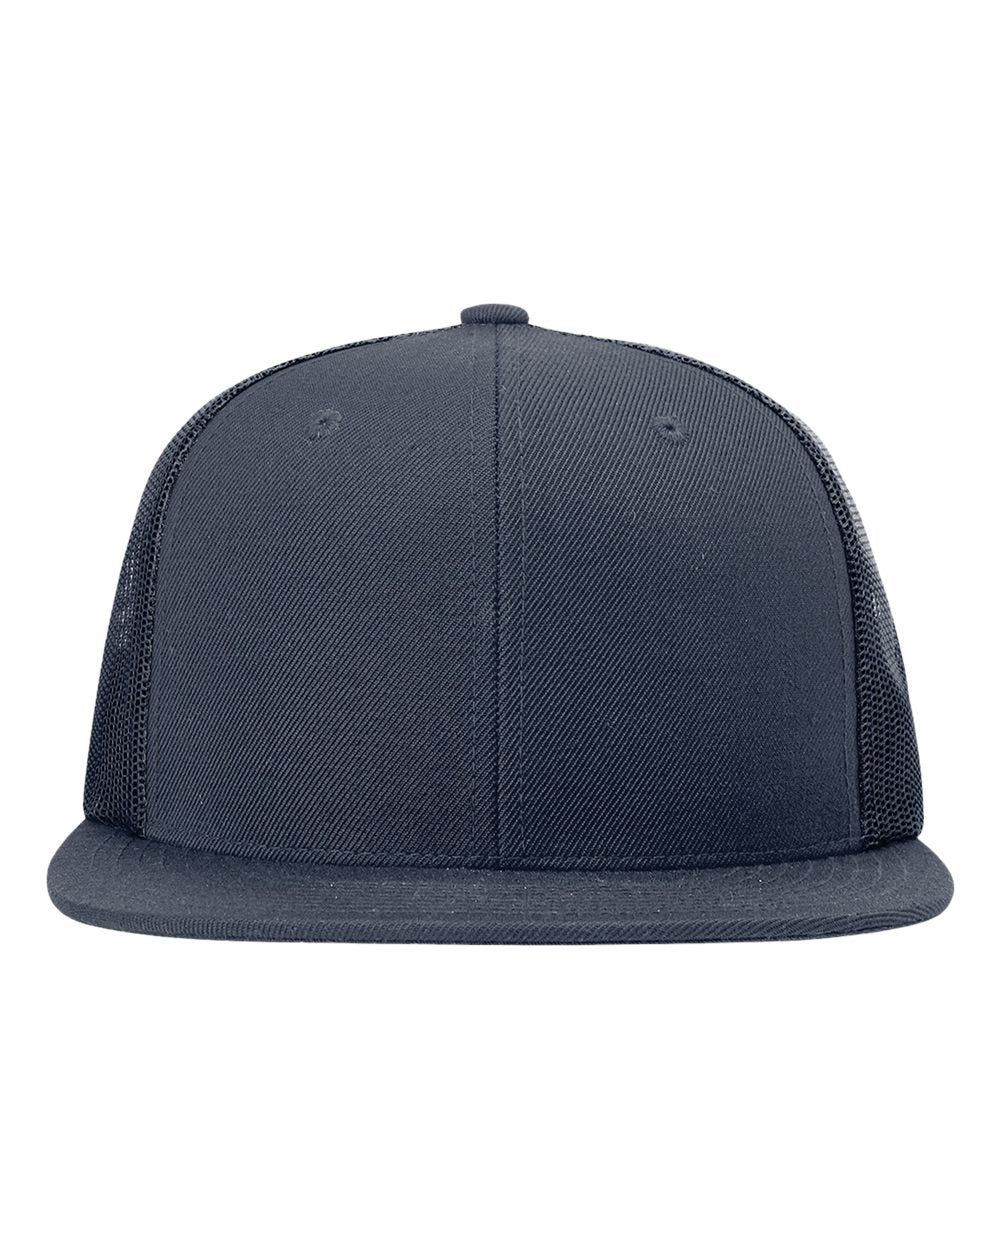 Richardson 511 Custom Leather Flat Bill Patch Hat